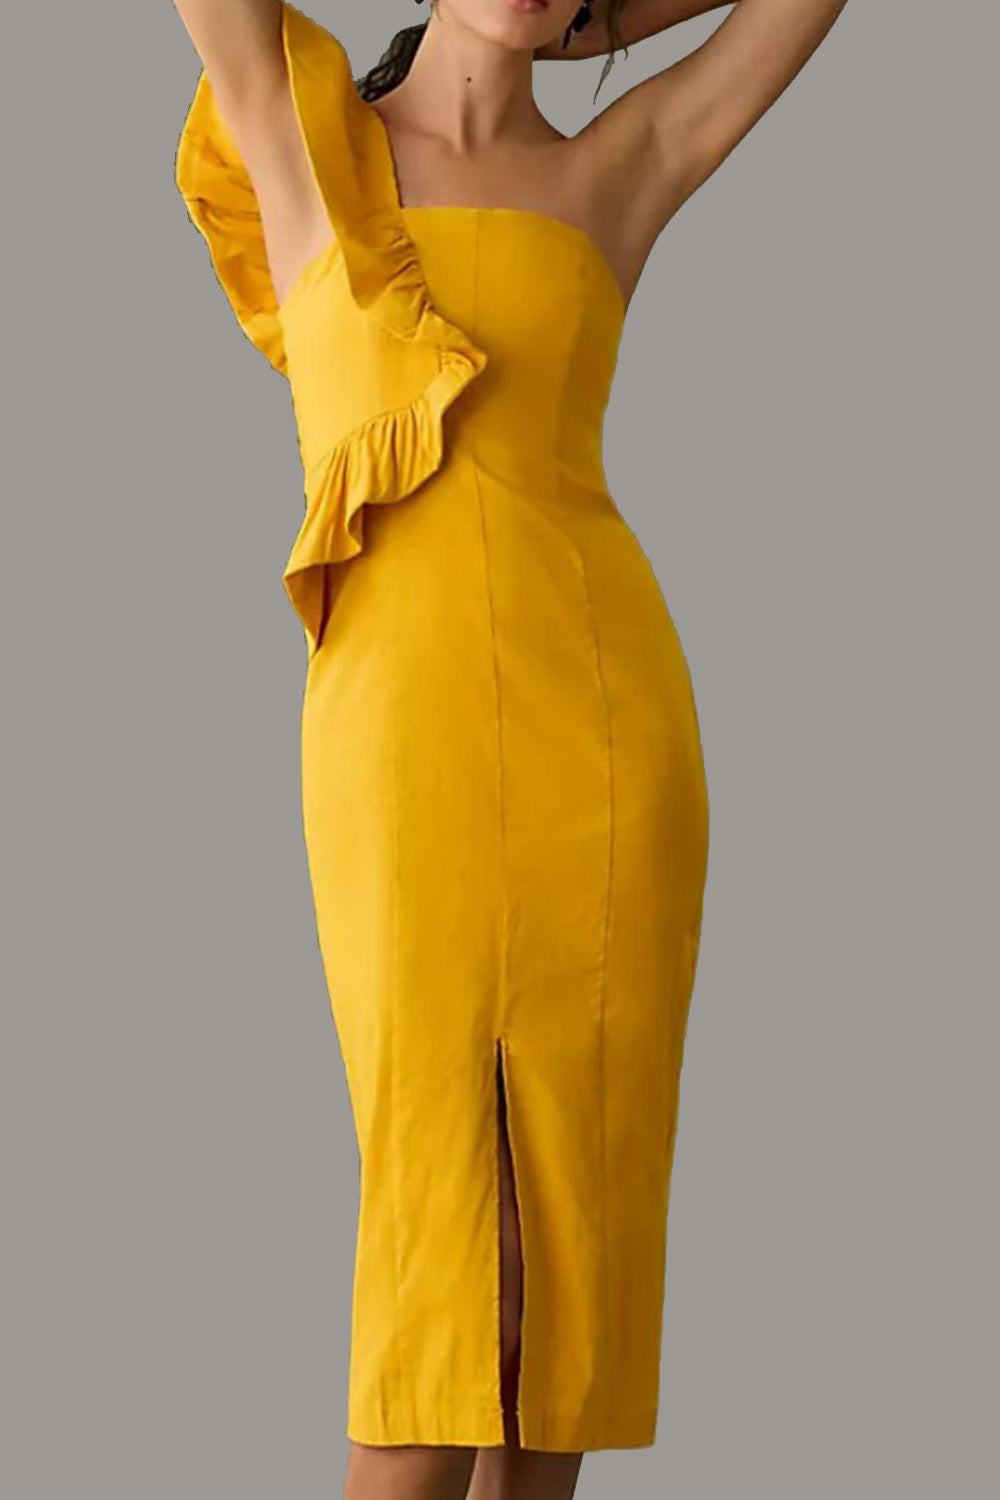 Winsome Yellow Dress